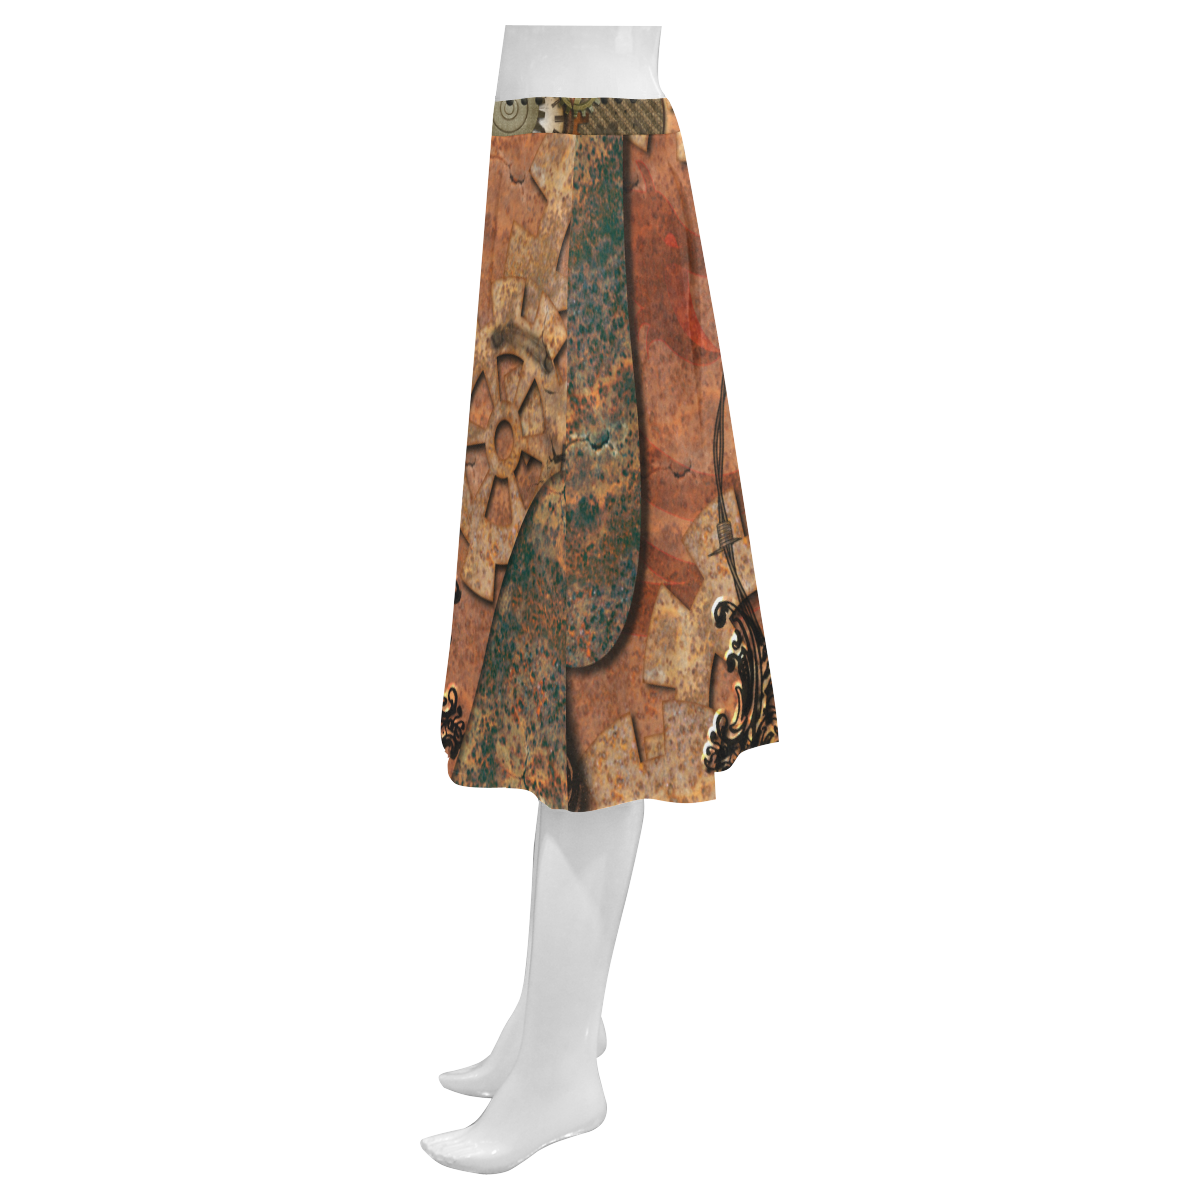 Steampunk wonderful heart, clocks and gears Mnemosyne Women's Crepe Skirt (Model D16)